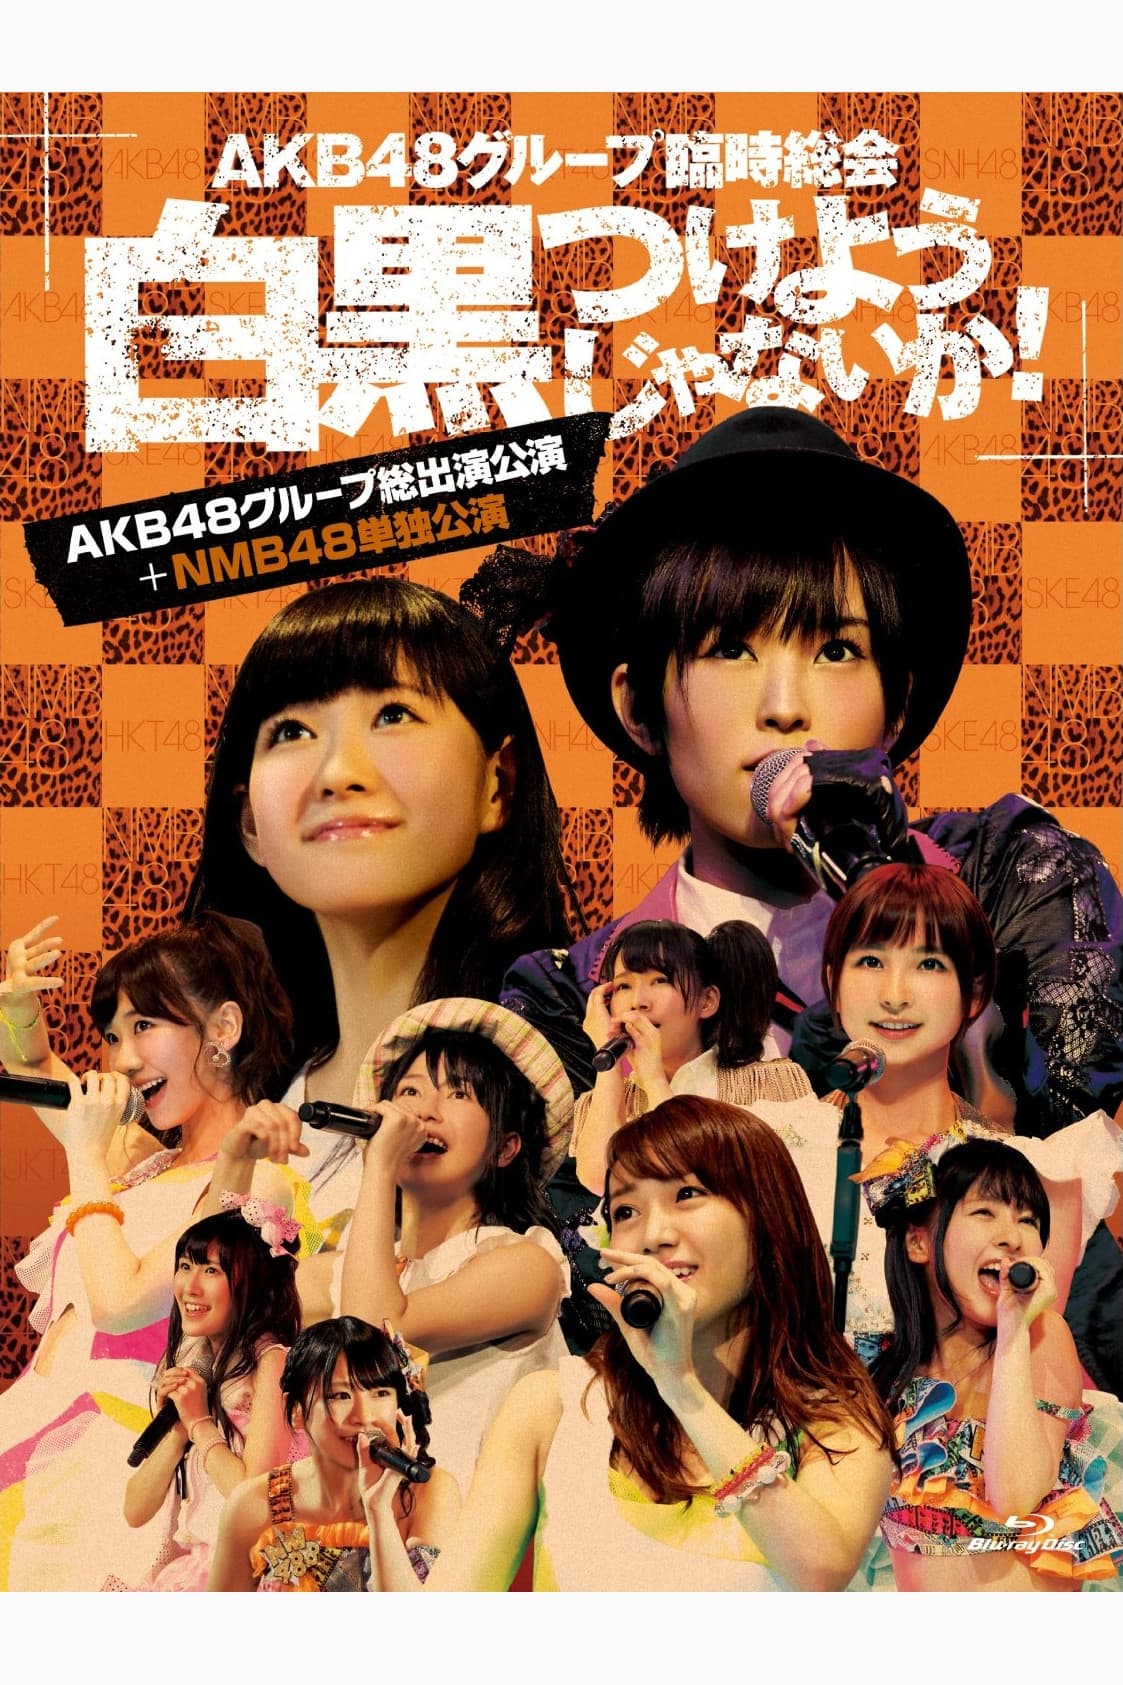 AKB48 Group Rinji Soukai - NMB48 Concert